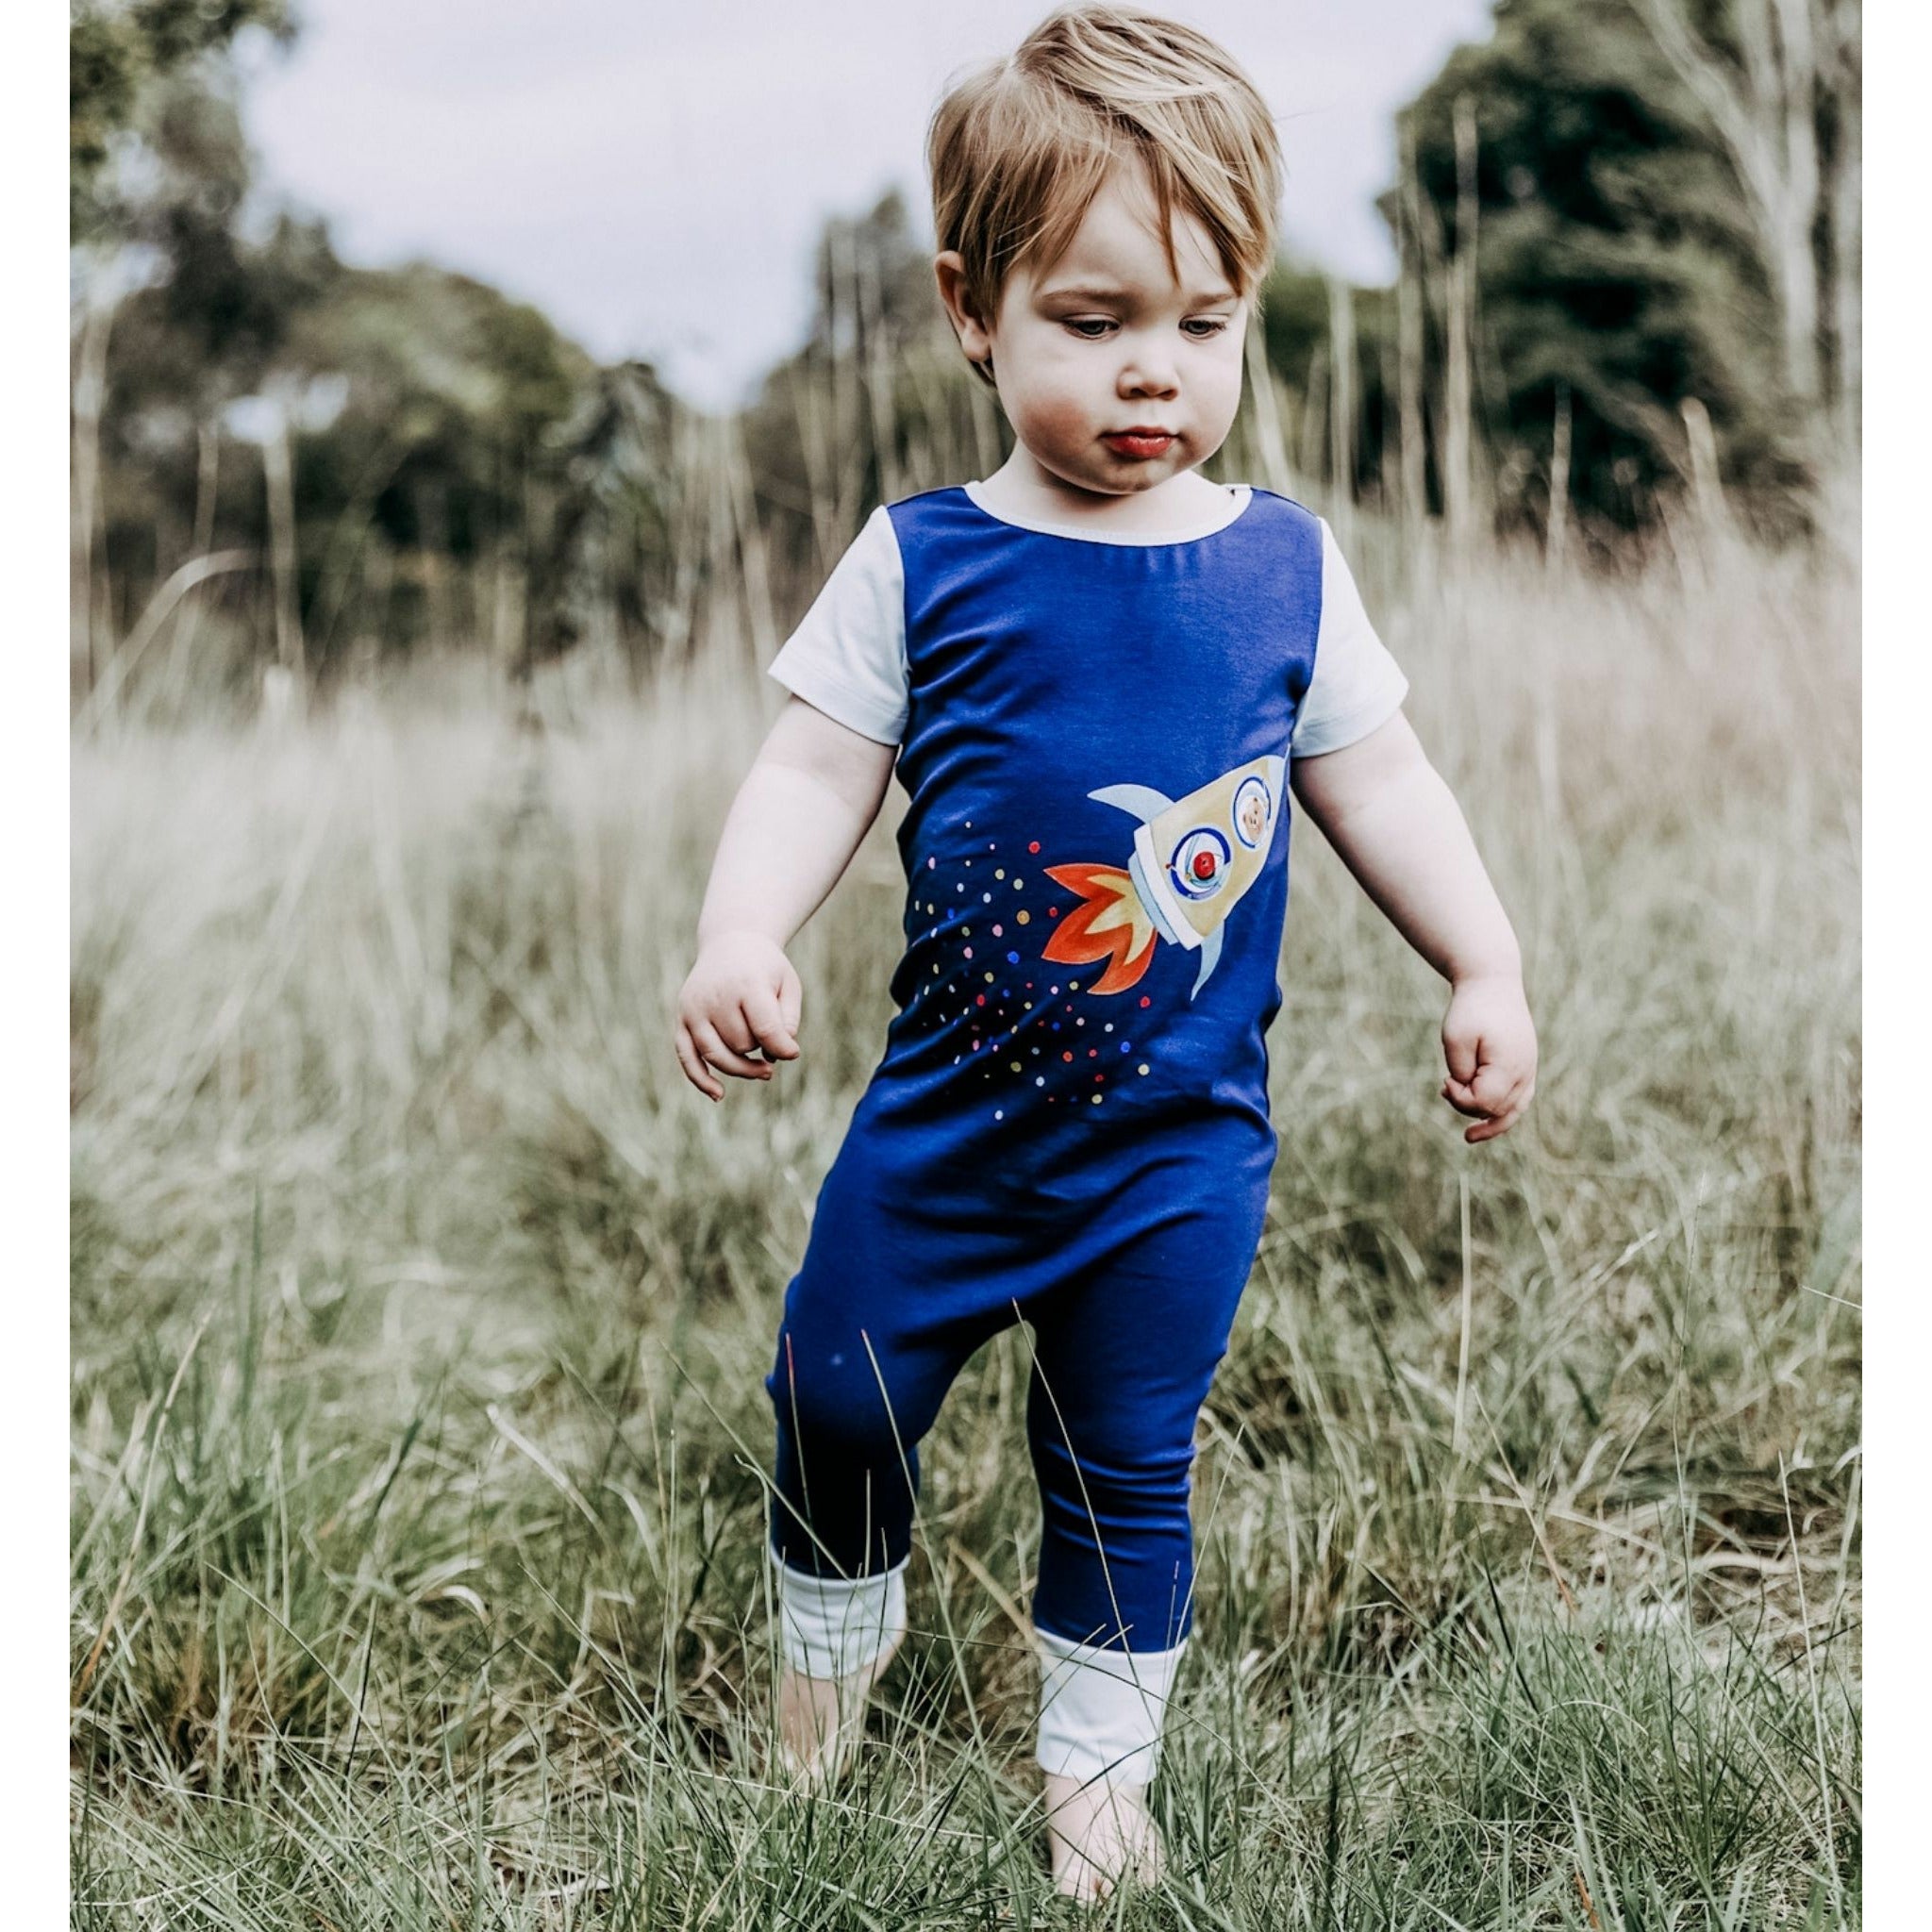 little boy outdoors in grass wearing navy blue romper with rocket illustration